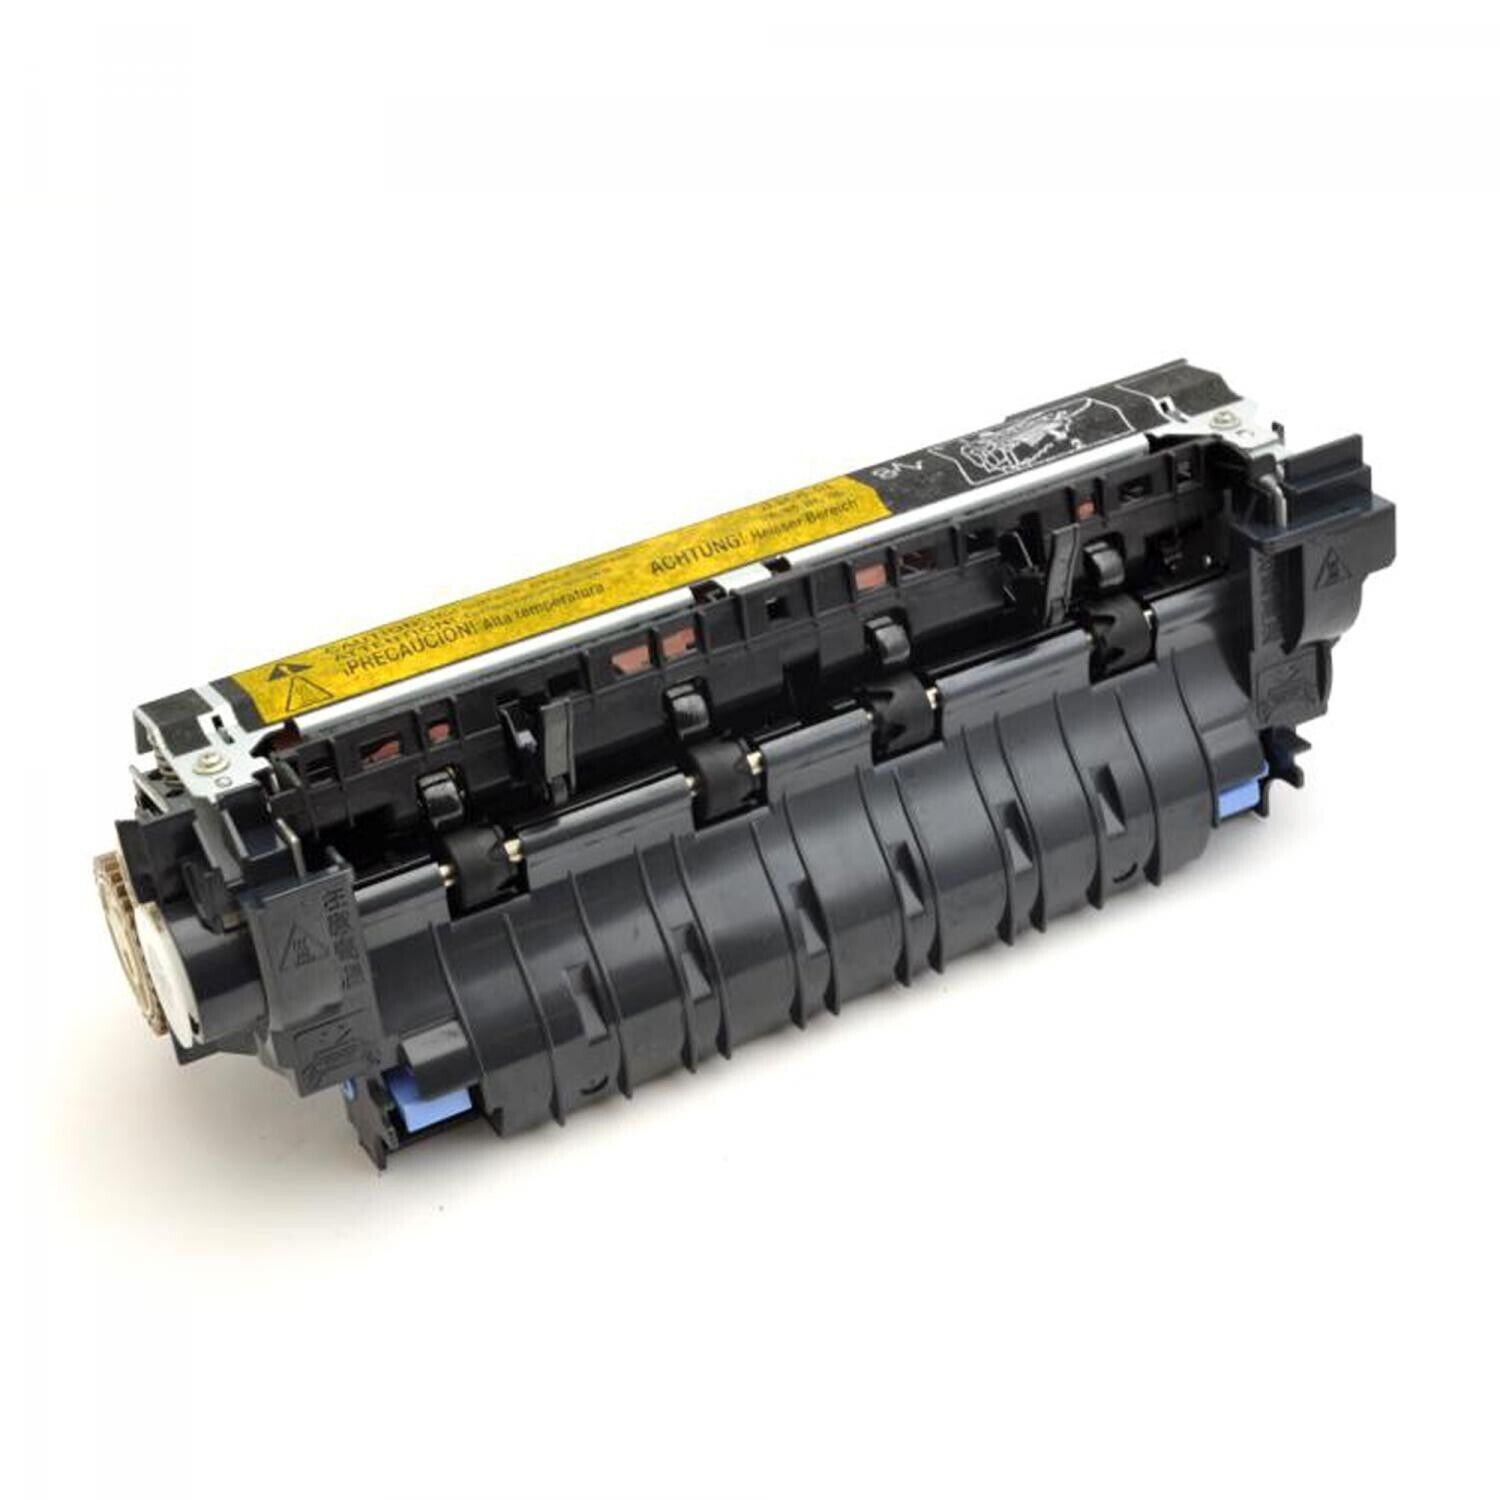 OEM RM1-4554 Fuser Assembly for HP LaserJet P4515, P4014, P4015